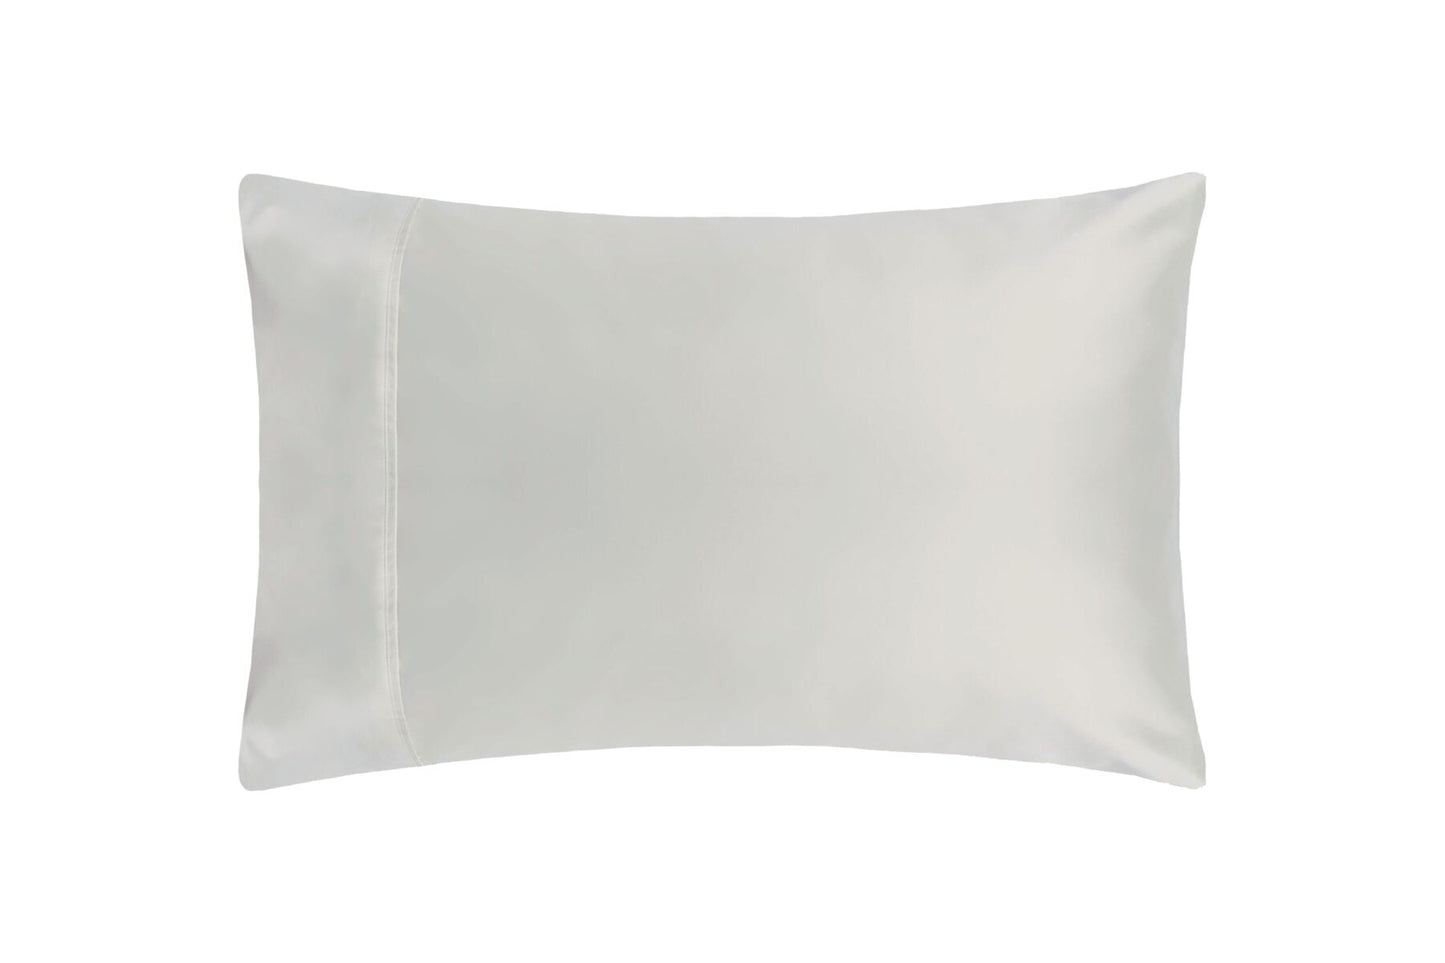 Belledorm-Pair of Housewife Pillowcases-100% Cotton-Platinum